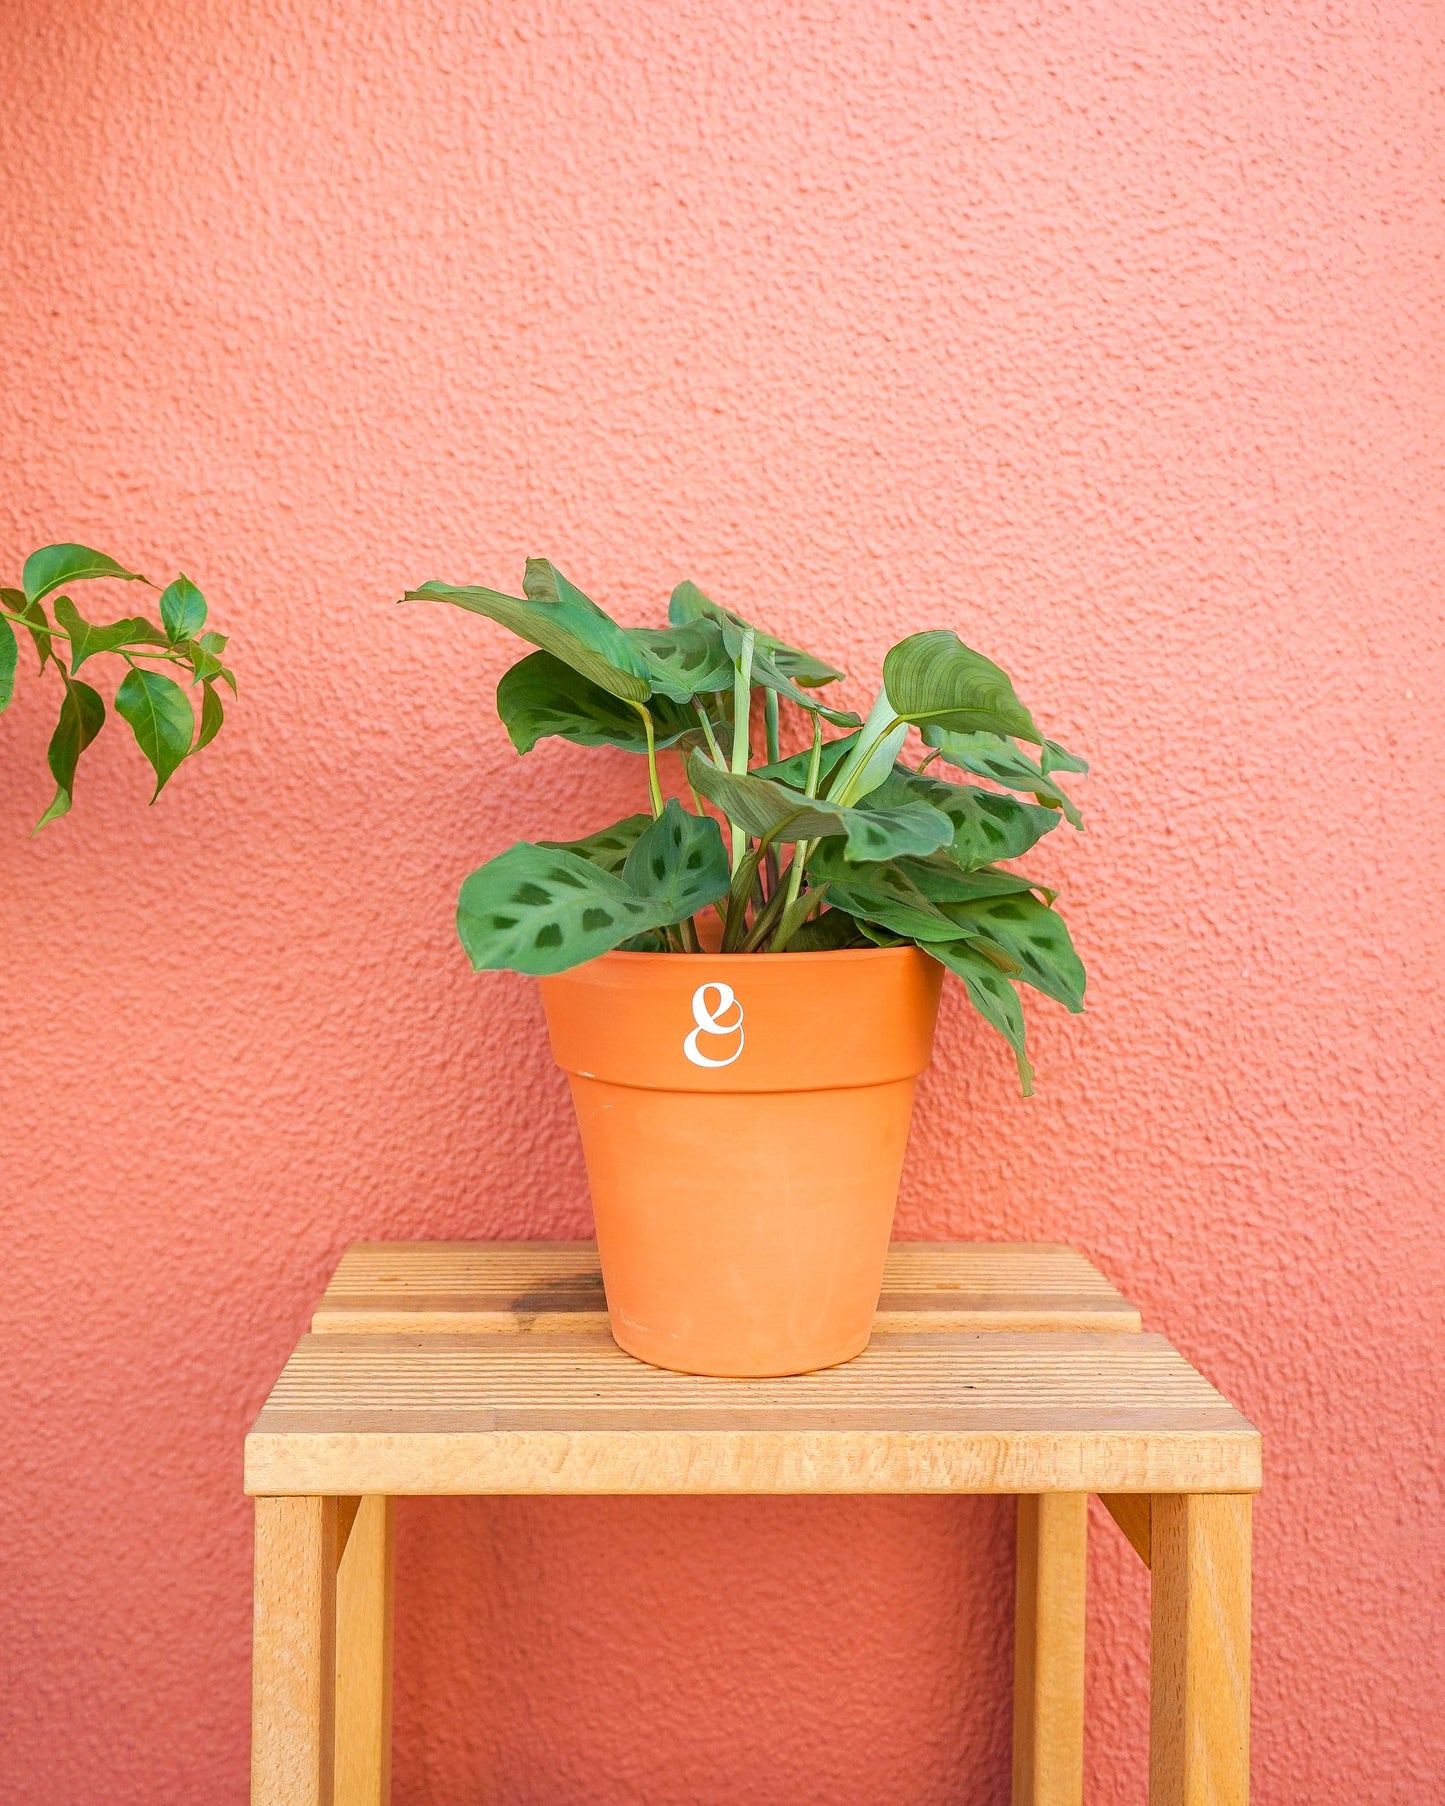 planta maranta kerchoveana em vaso de barro, da loja de plantas online curae